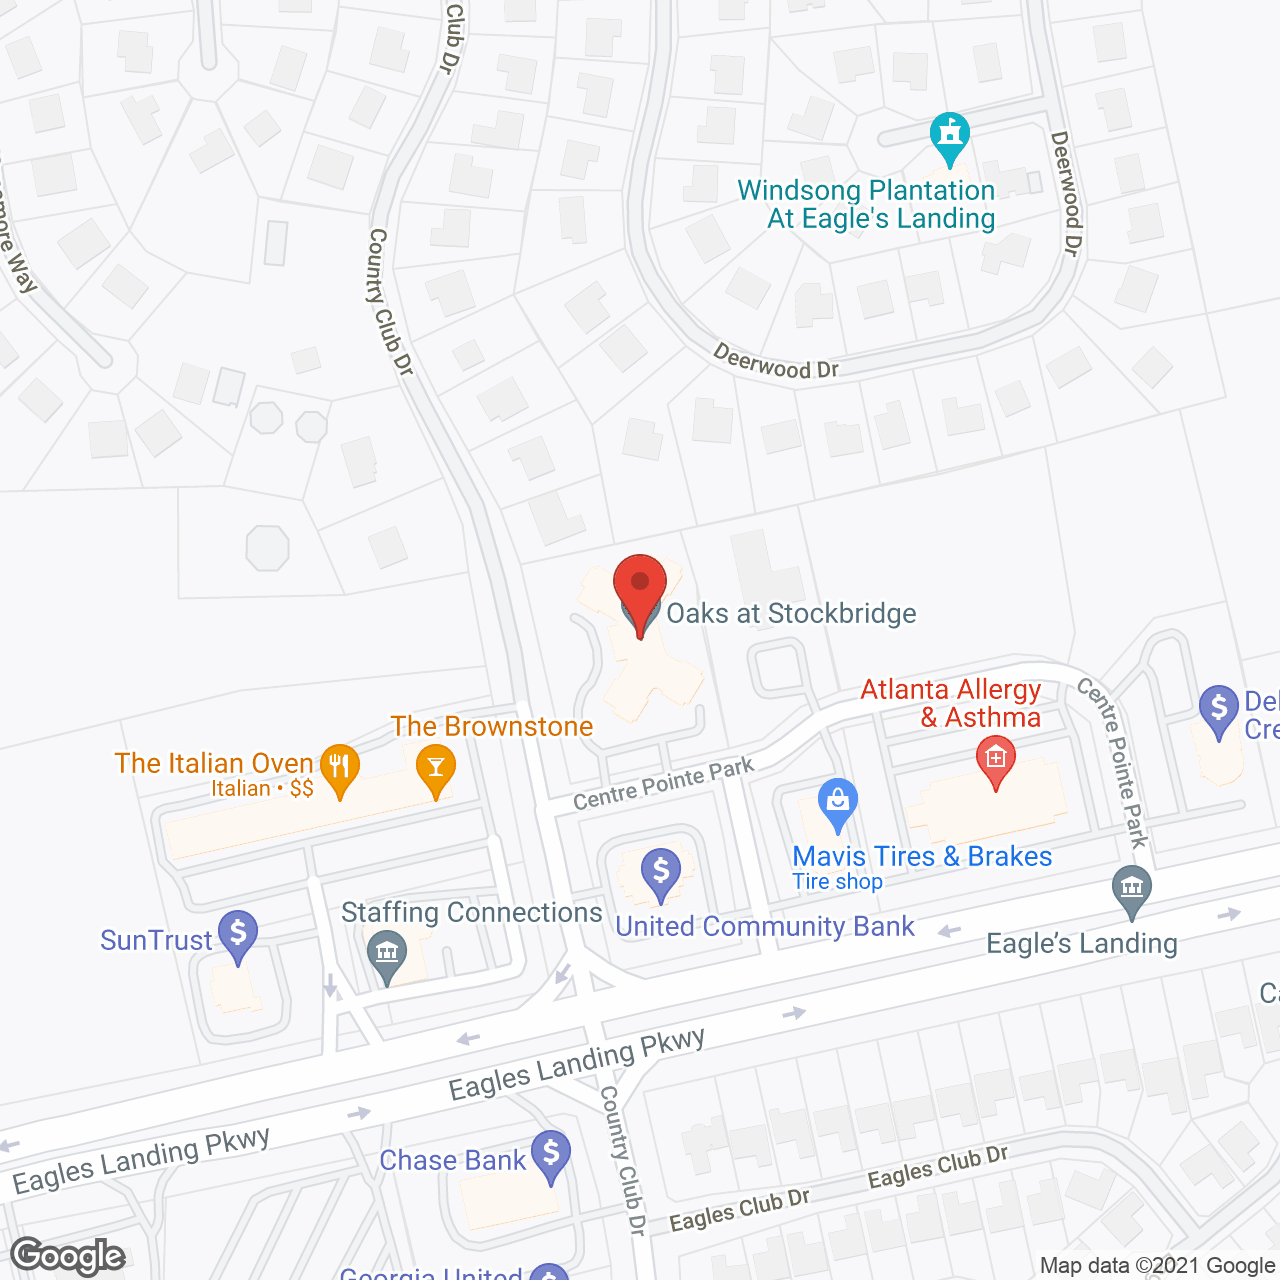 Oaks at Stockbridge in google map